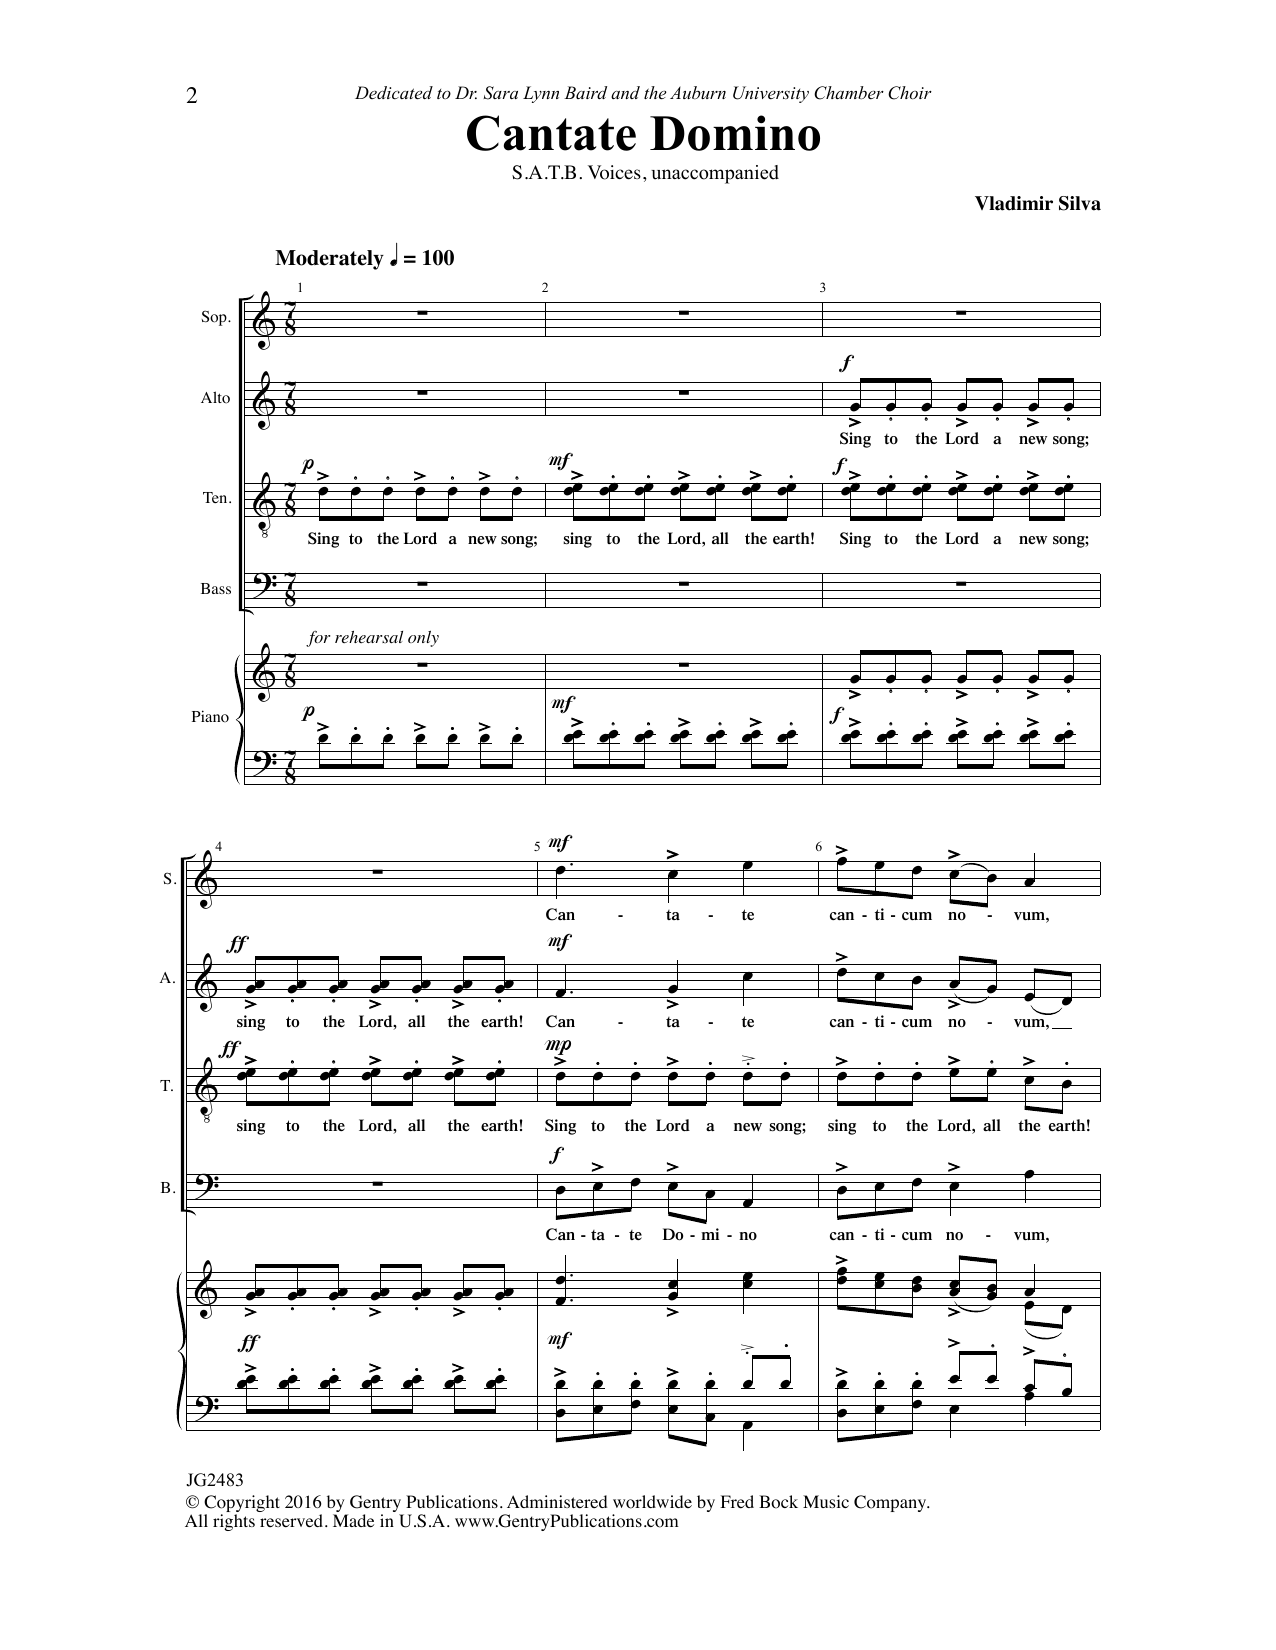 Vladimir Silva Cantate Domino sheet music notes and chords arranged for SATB Choir